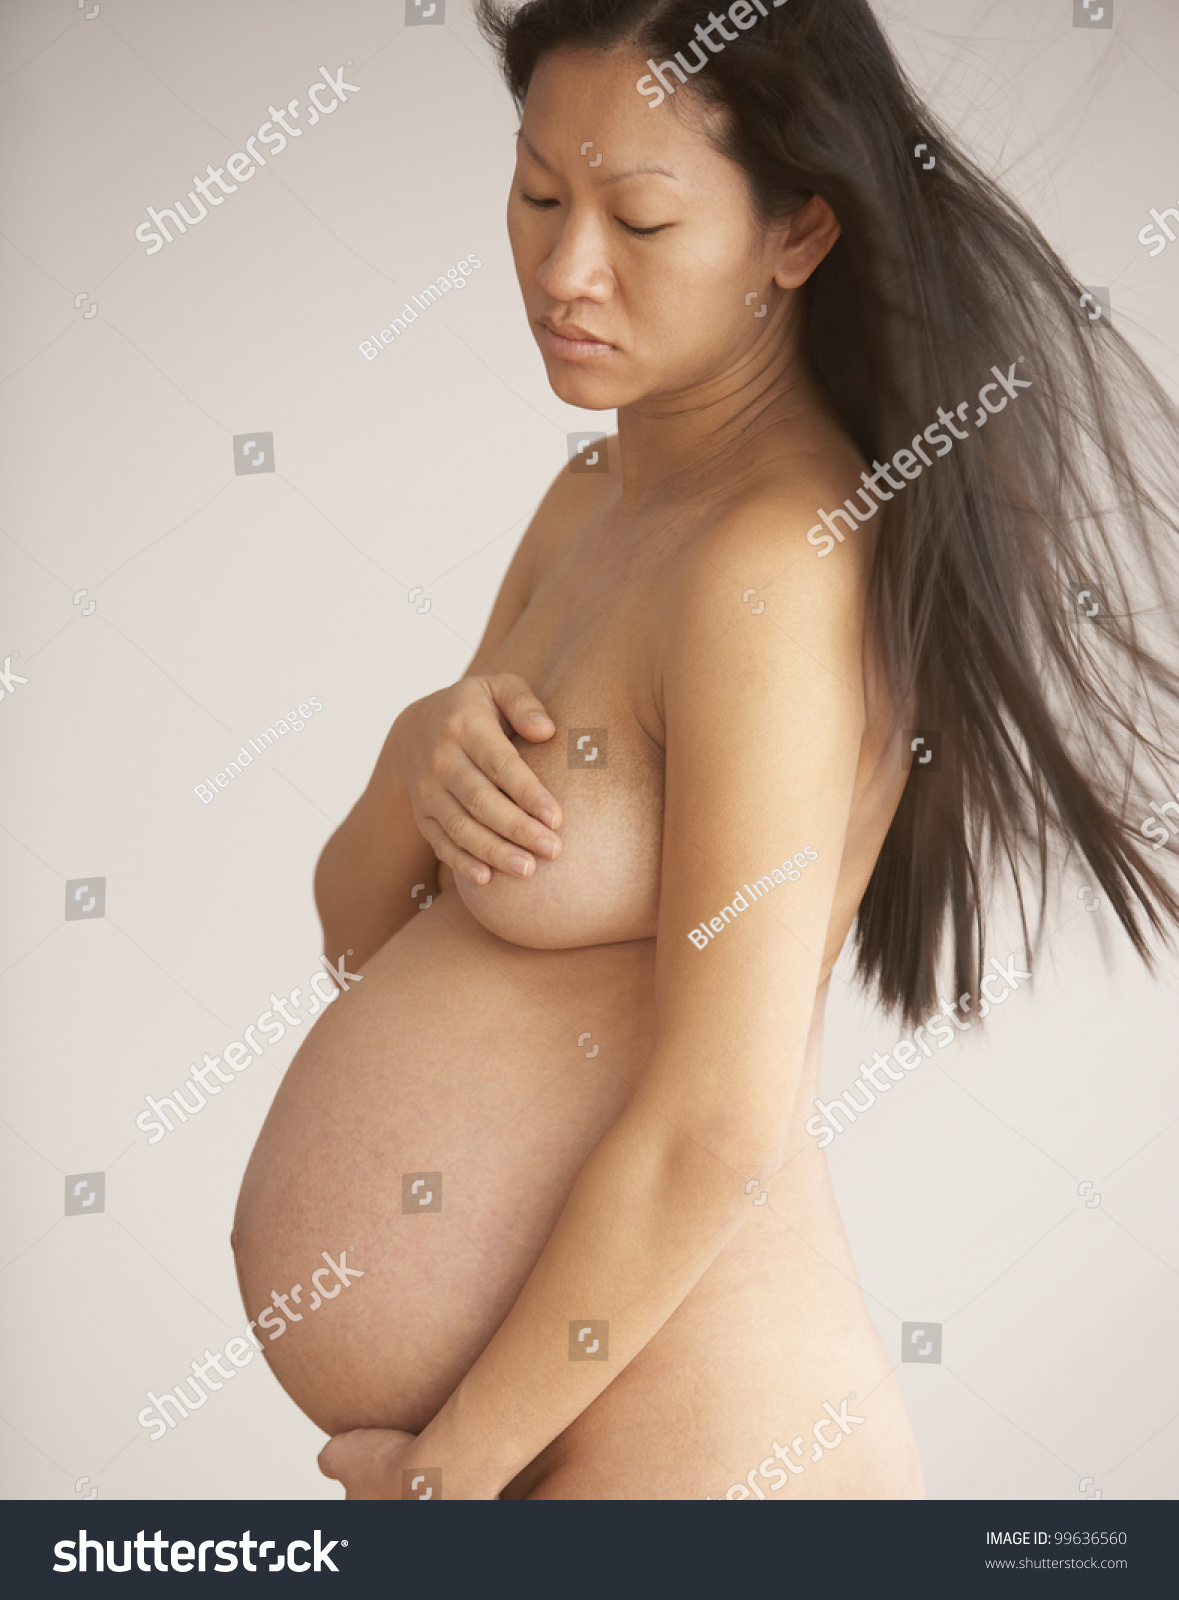 Pregnant Nude Women 13